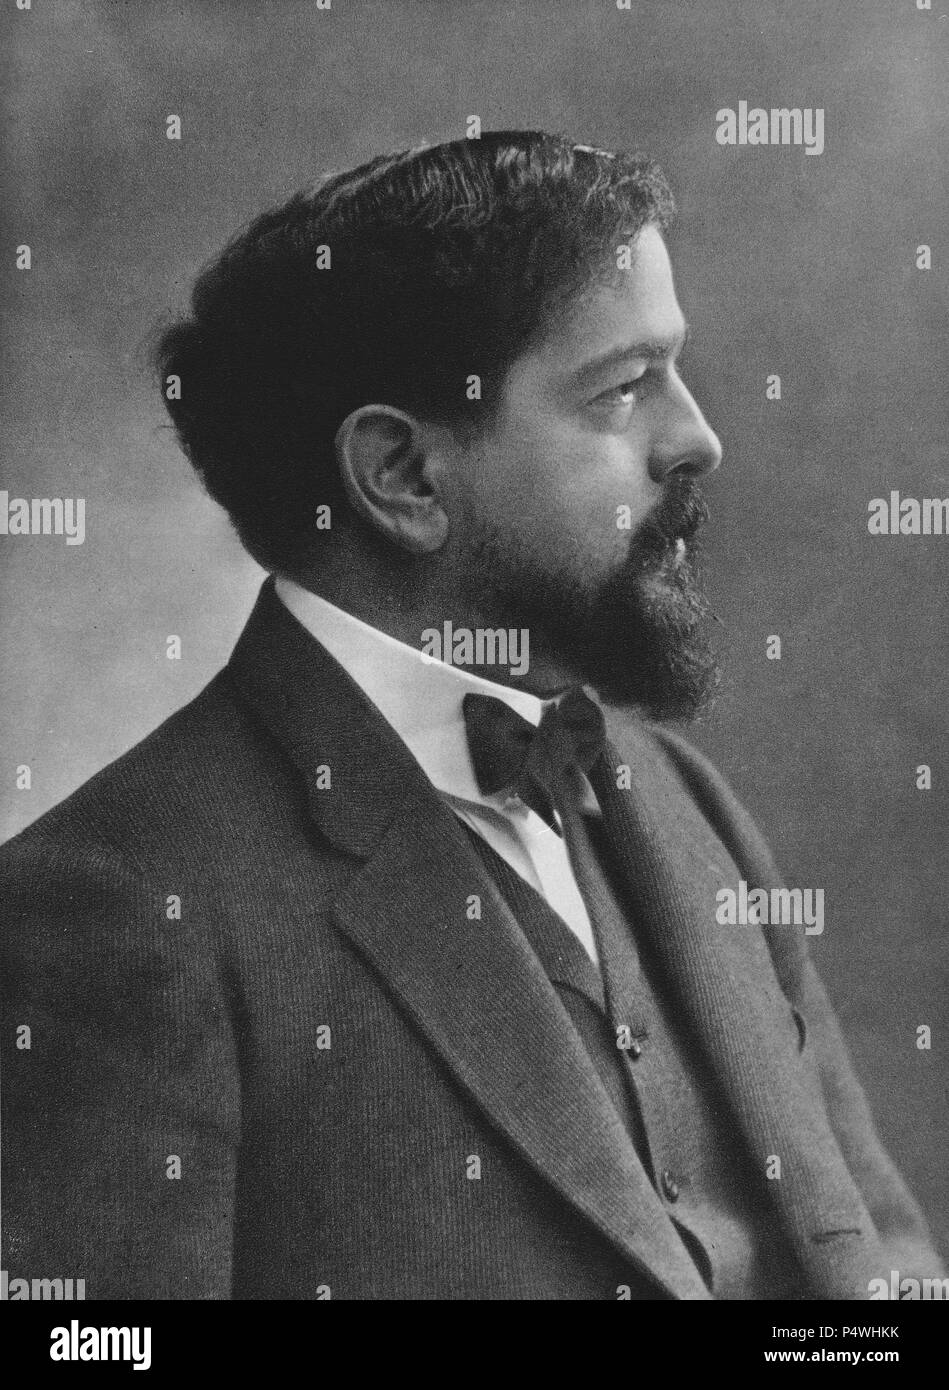 CLAUDE DEBUSSY (1862/1918) - compositore FRANCES FUNDADOR DE LA ESCUELA IMPRESIONISTA DE MUSICA. Posizione: Instituto de COOPERACION IBEROAMERICANA, MADRID, Spagna. Foto Stock